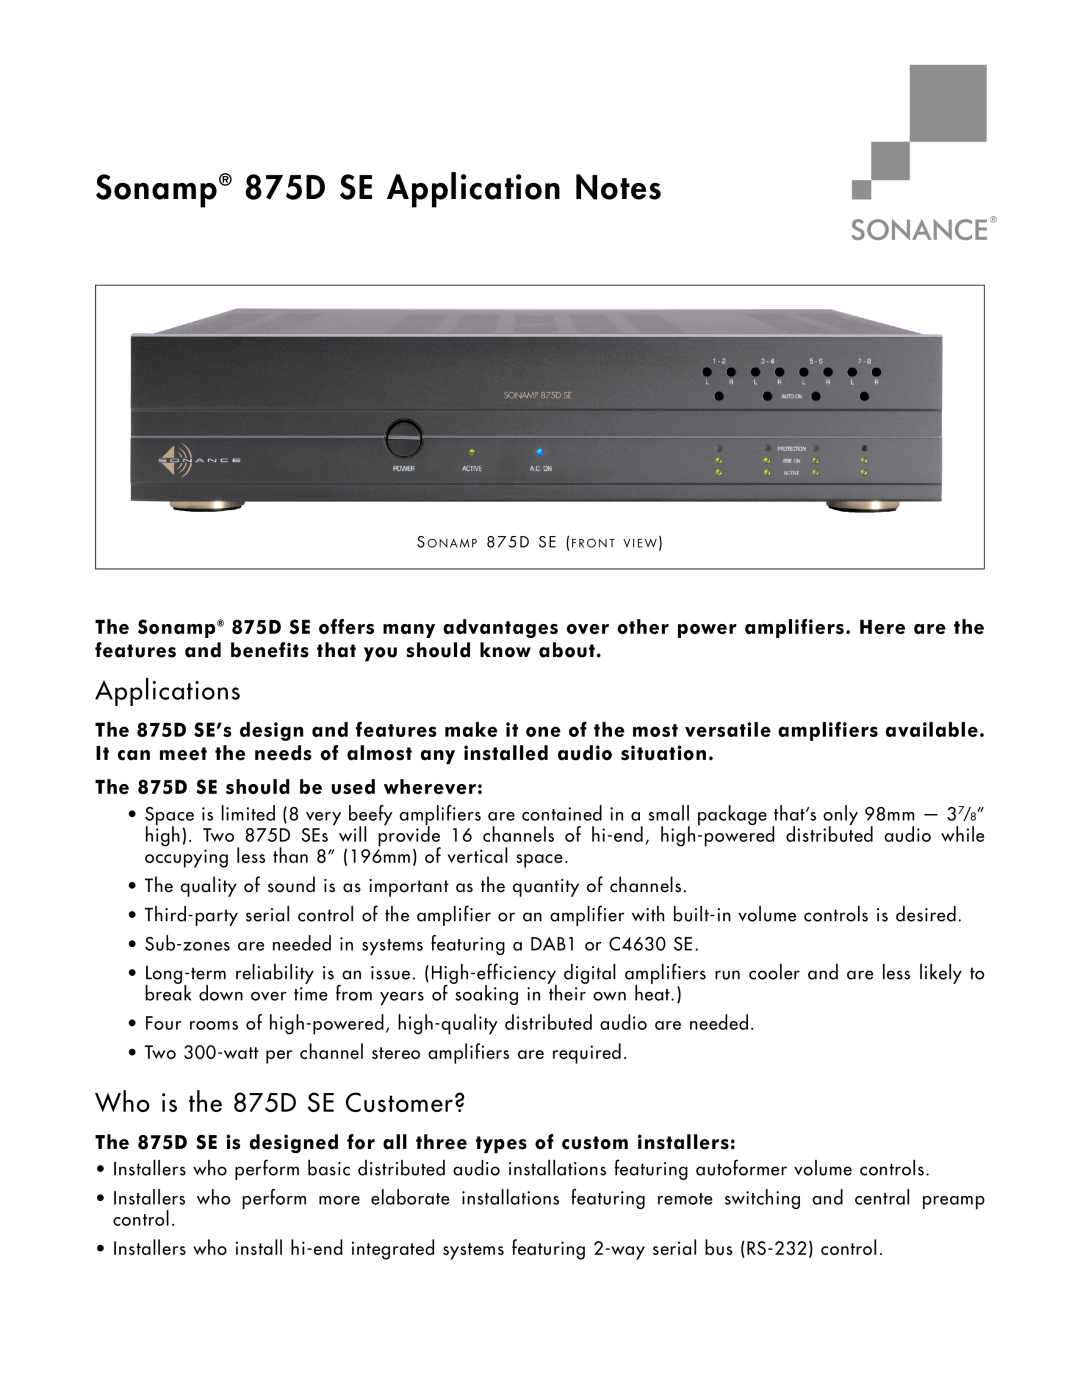 Sonance instruction manual SONAMP 875D SE, Channel Amplifier 